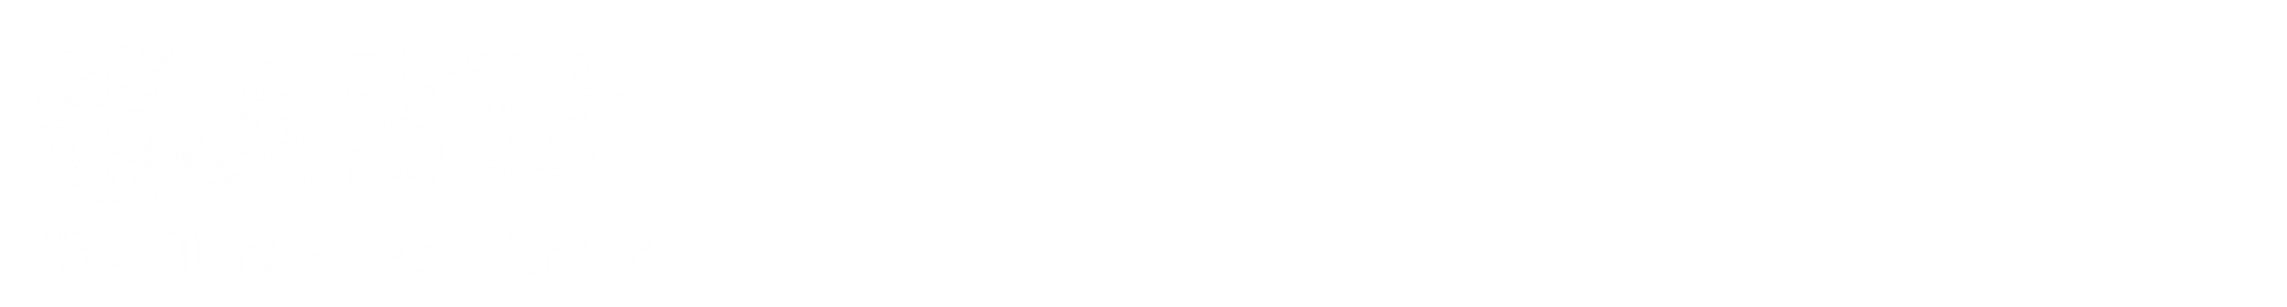 Abta Travel Association